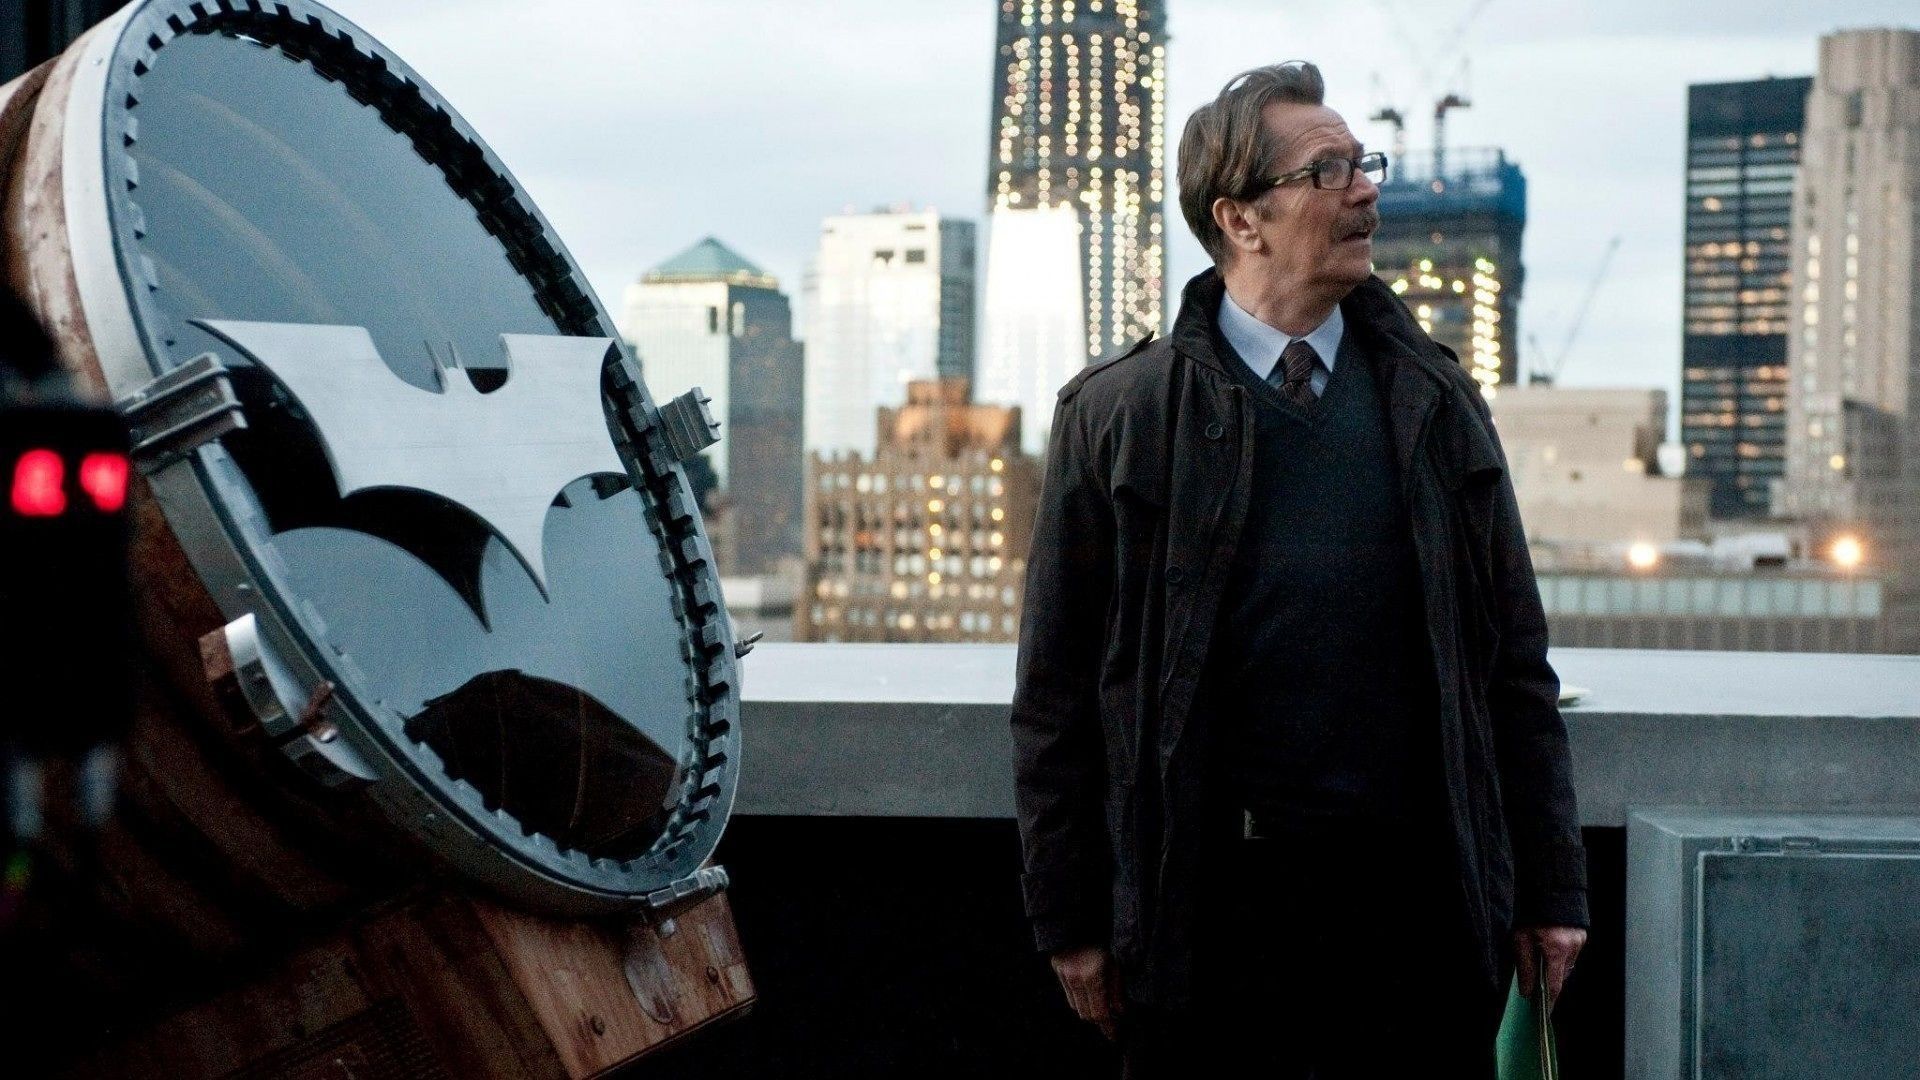 Gary Oldman as Commissioner Gordon in The Dark Knight trilogy